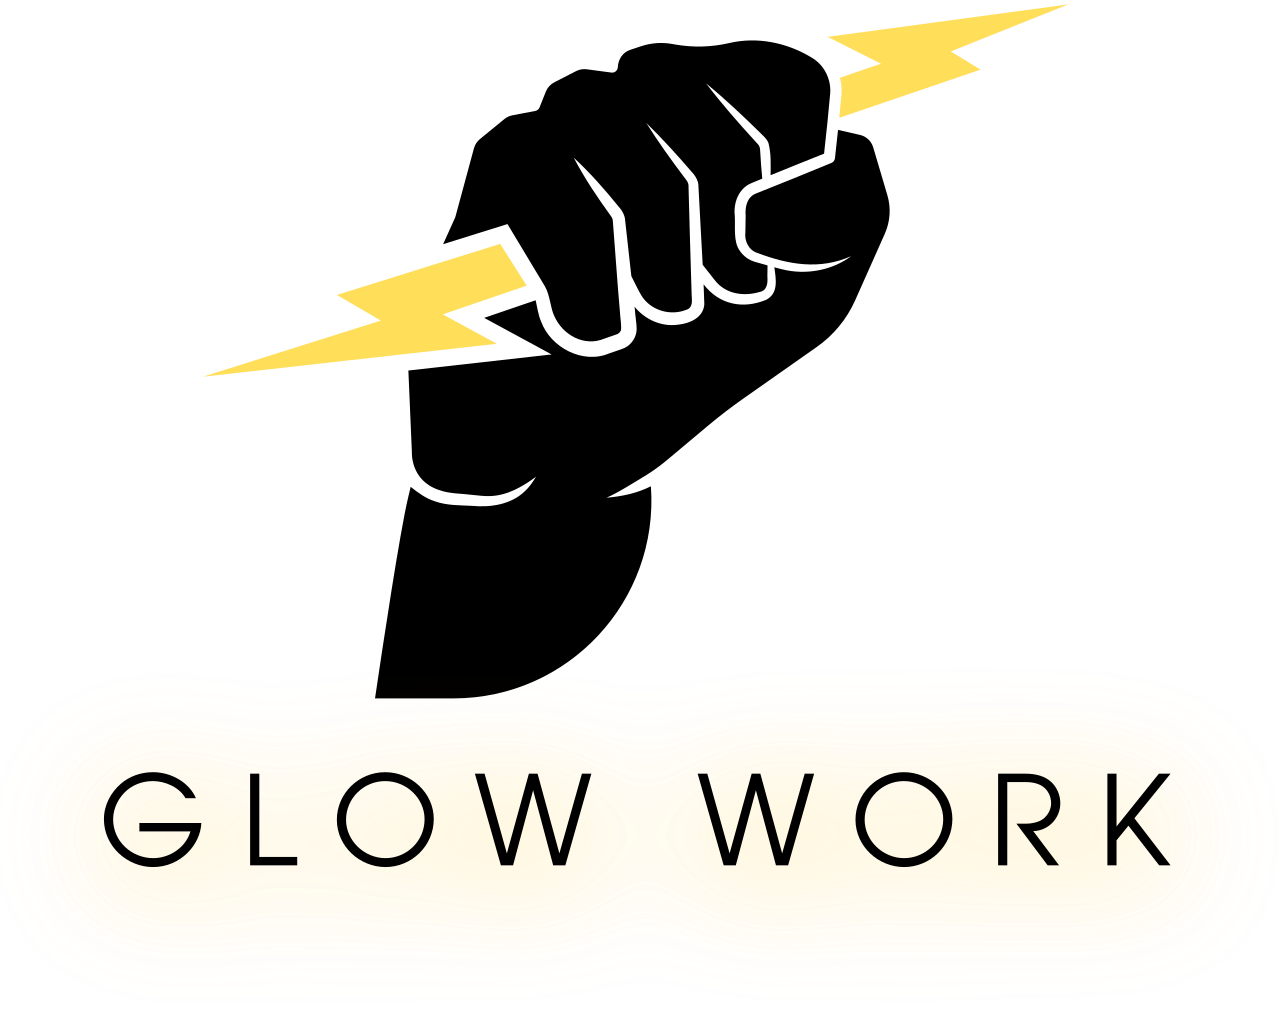 Glow work's web page